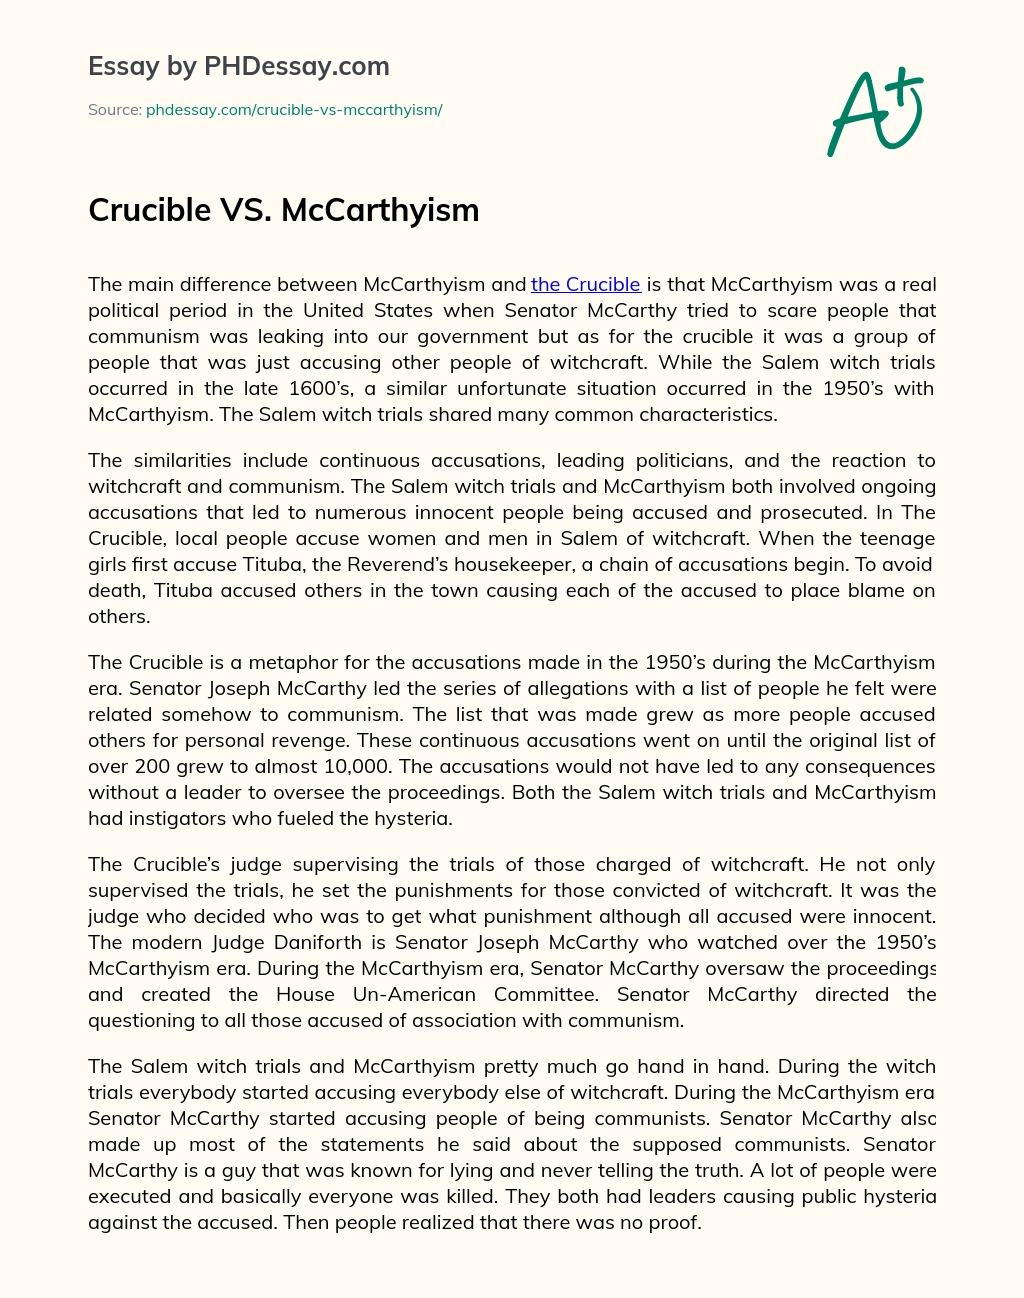 Crucible VS. McCarthyism essay